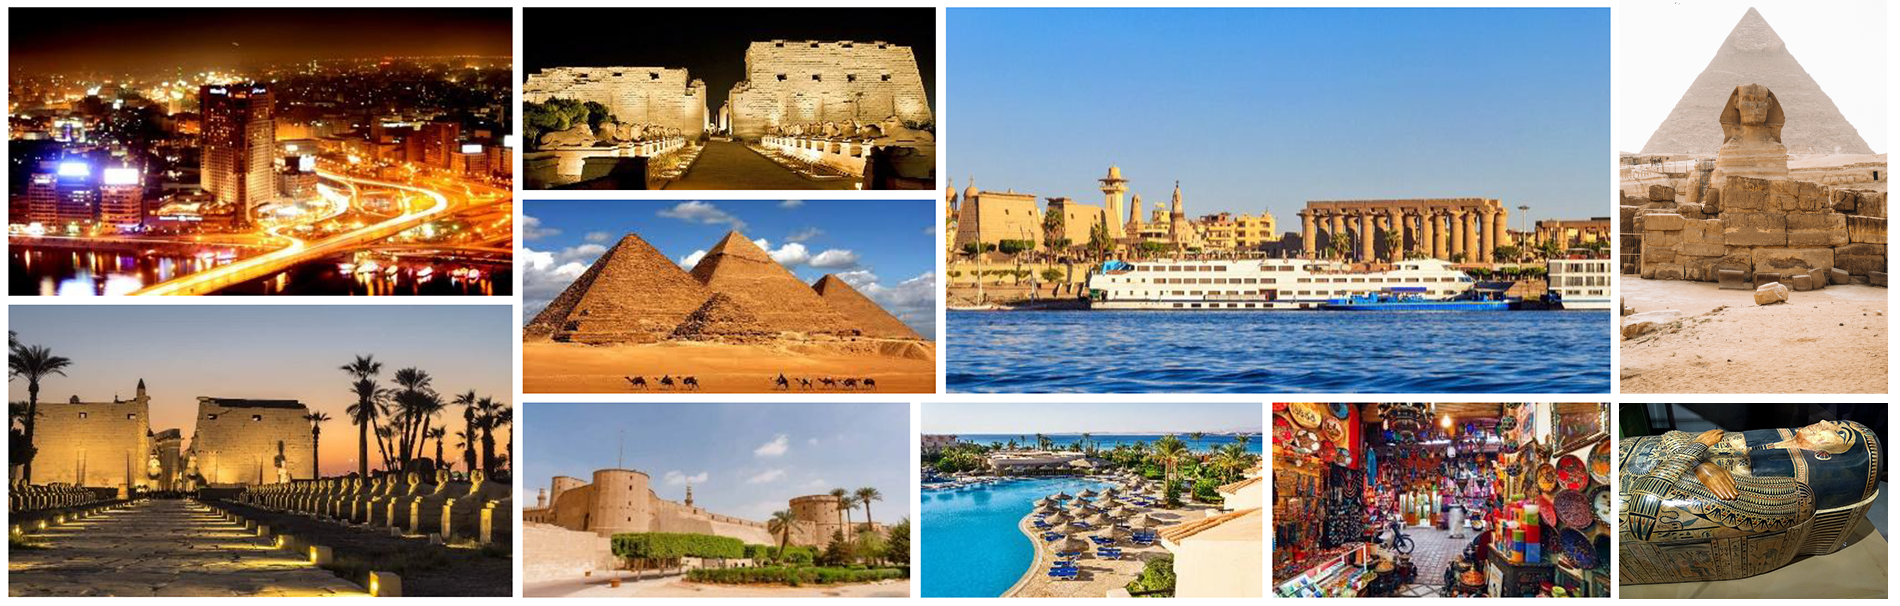 LIII ONTA ANNUAL MEETINGCAIRO (Egypt) 2023